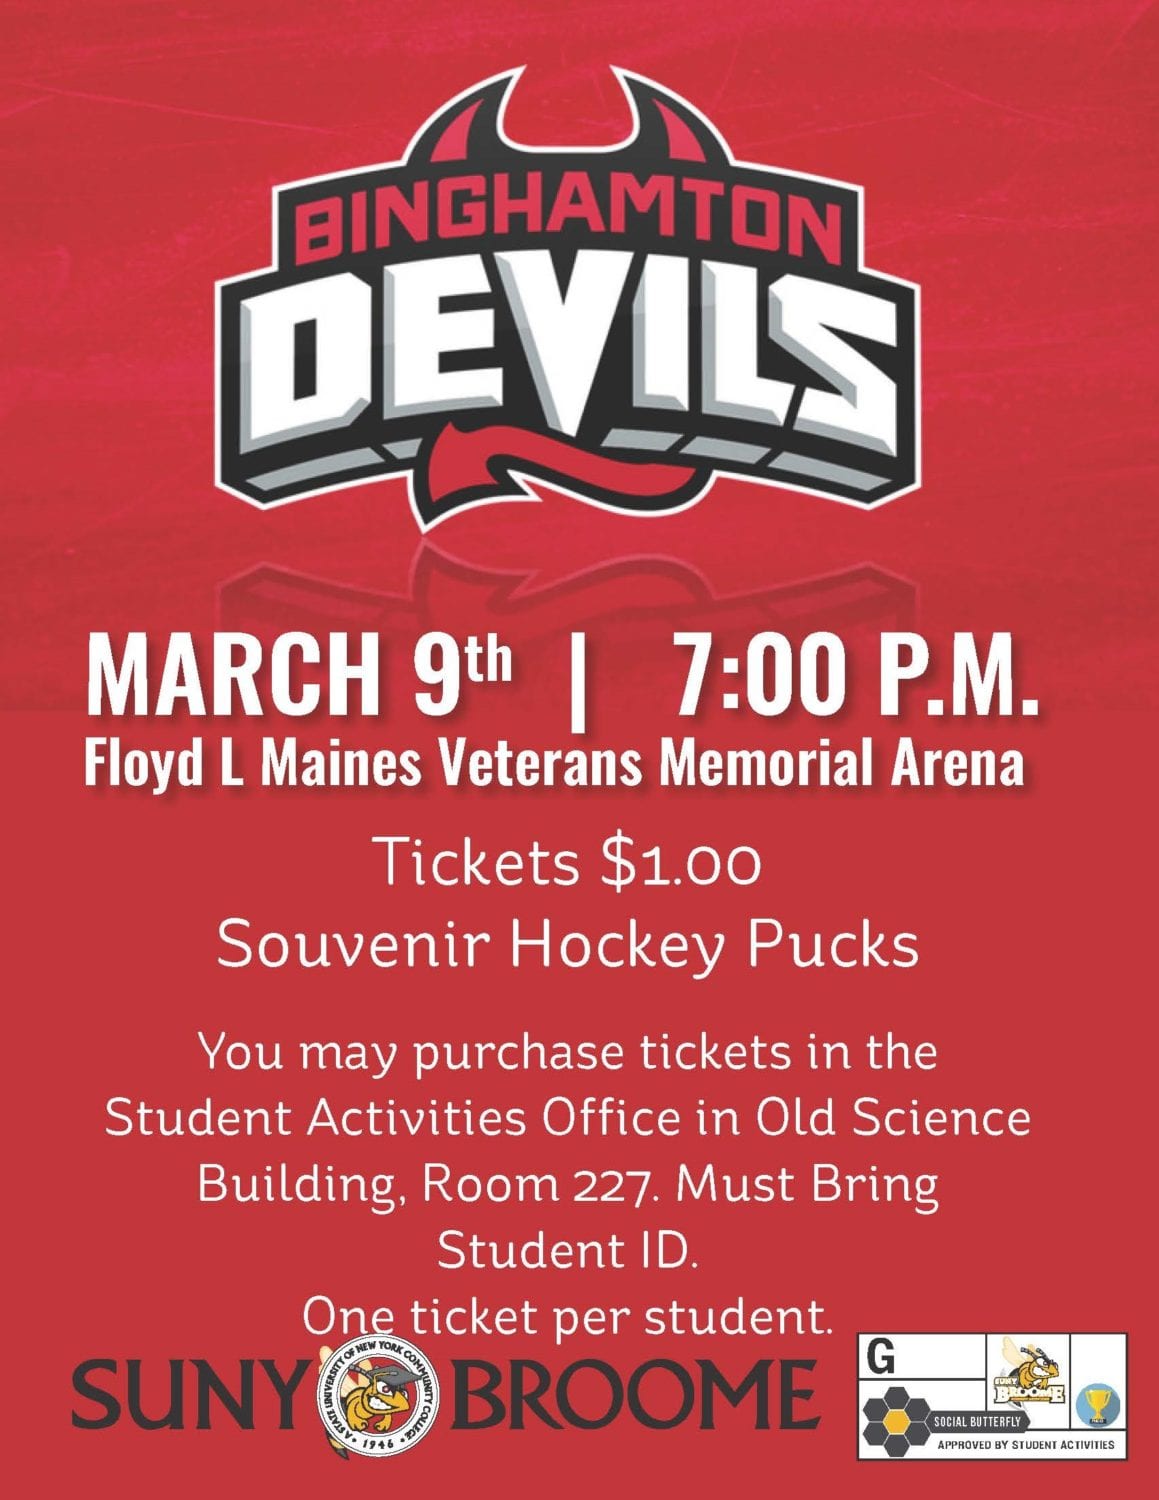 Binghamton Devils hockey night on March 9